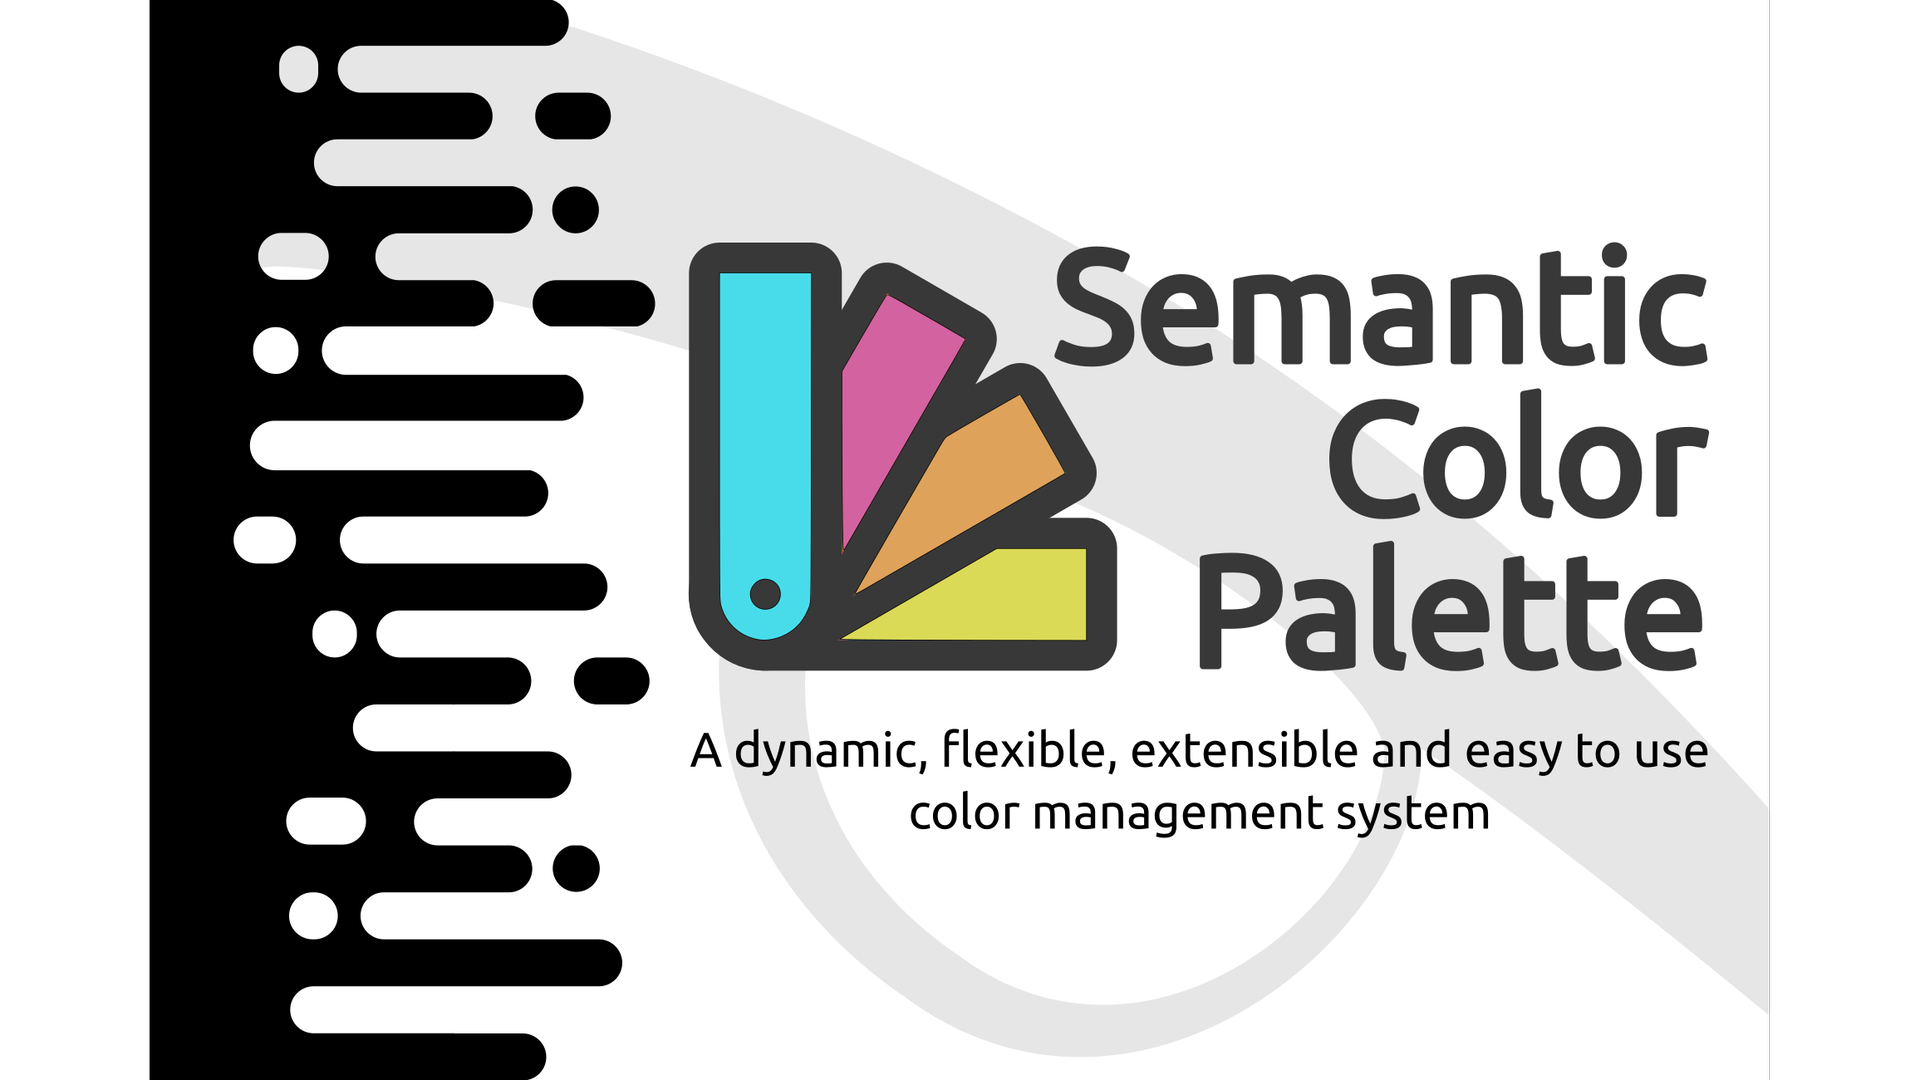 Promotional card for the "Semantic Color Palette" Unity asset